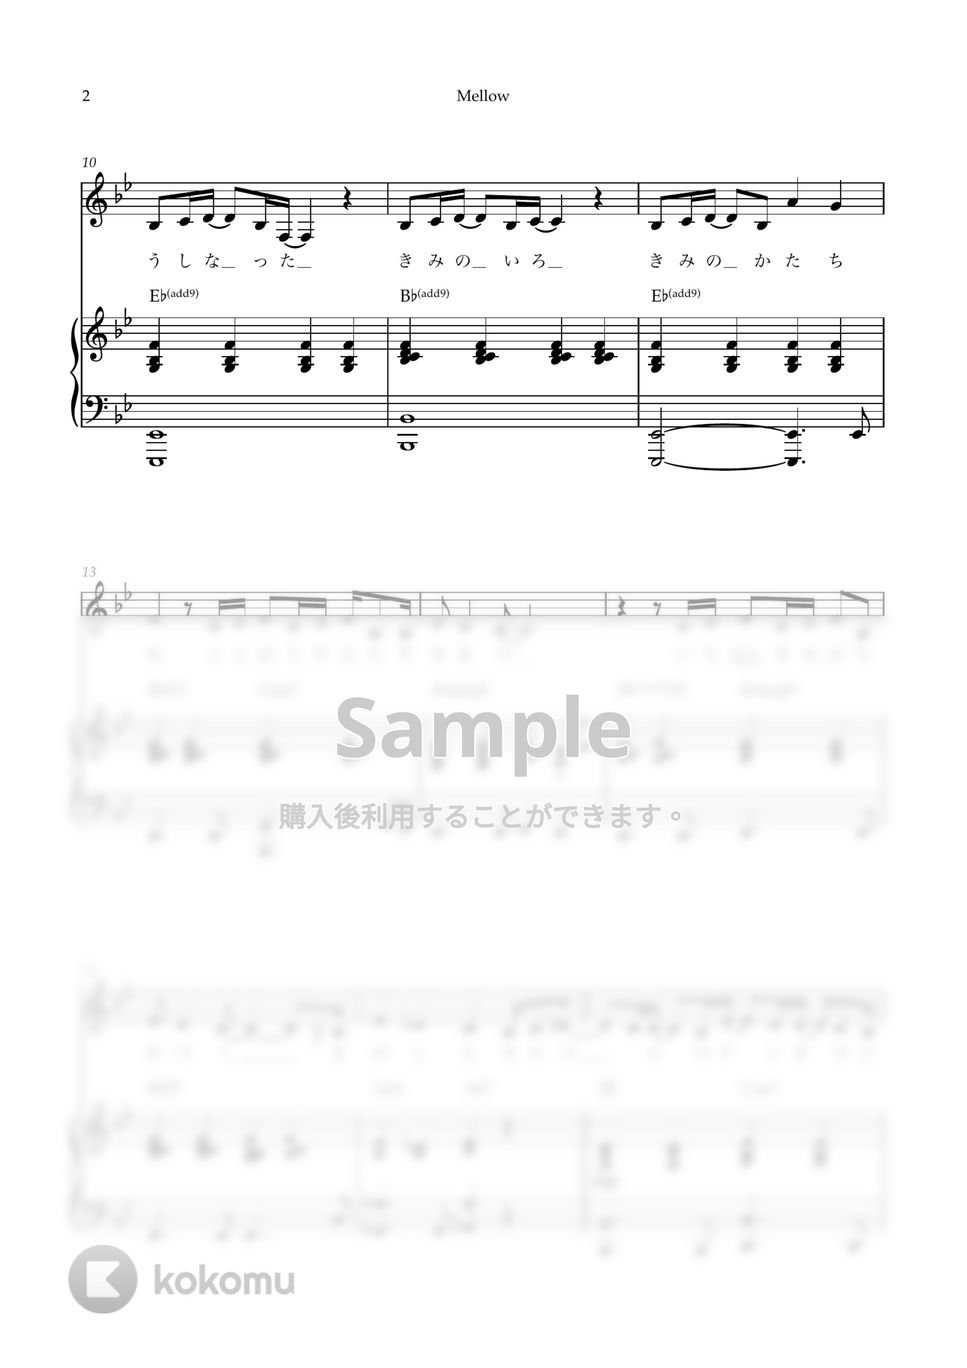 TOMOO - Mellow (ピアノ伴奏/弾き語り/TOMOO/Mellow) by kanapiano